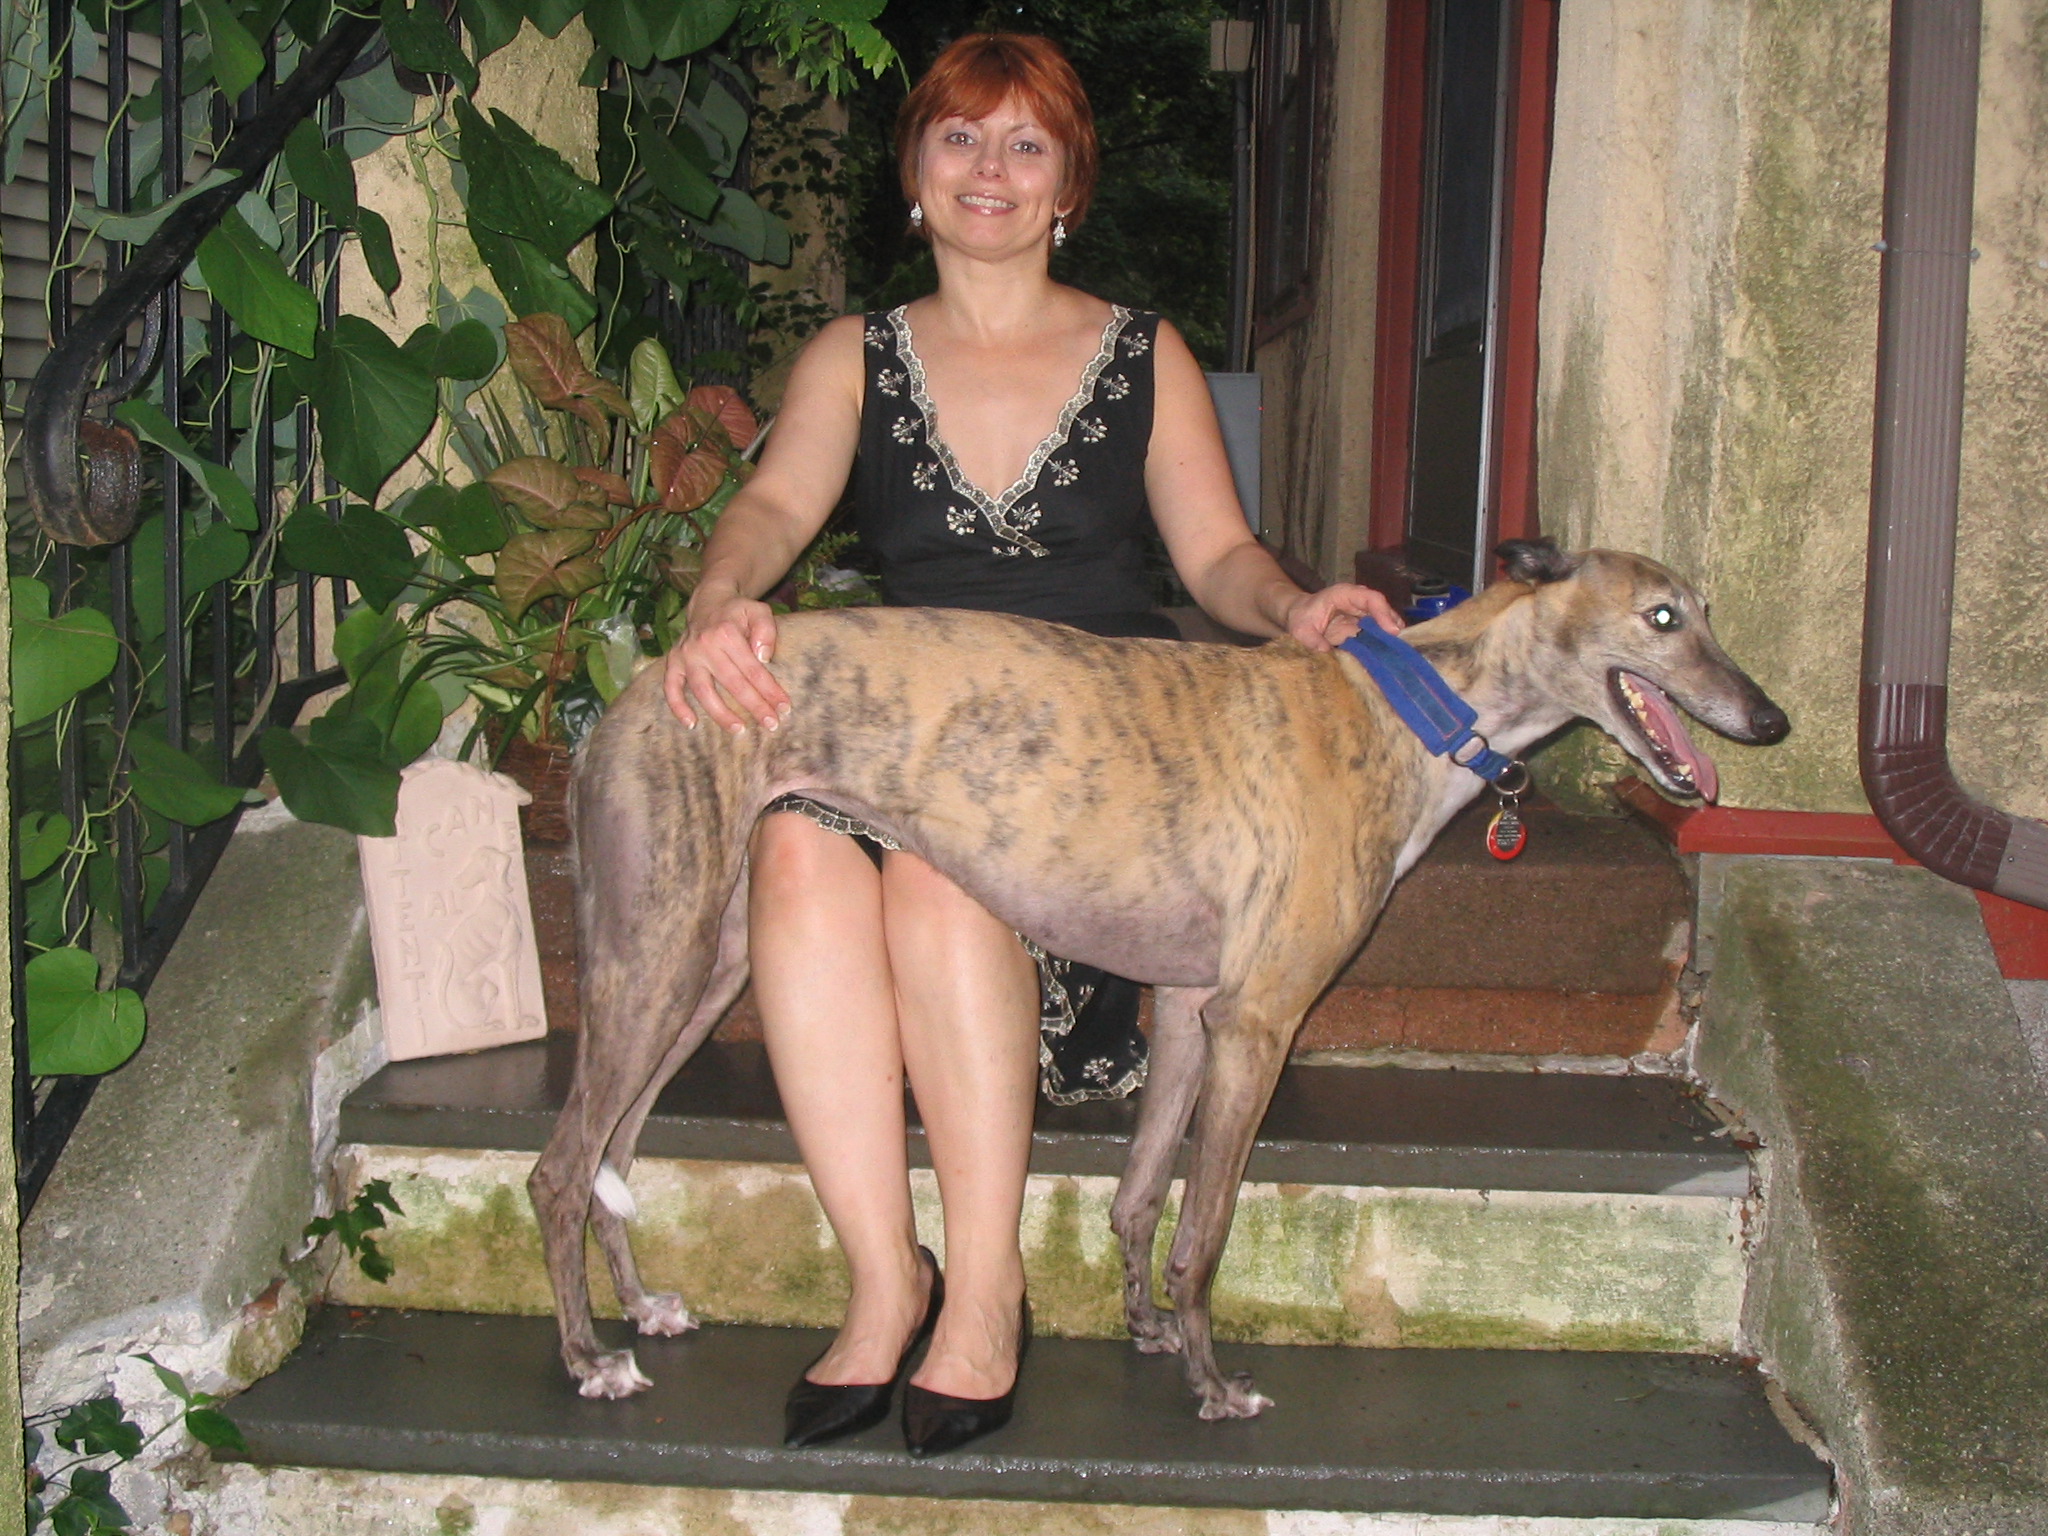 The author, Christine, with her greyhound Zoe